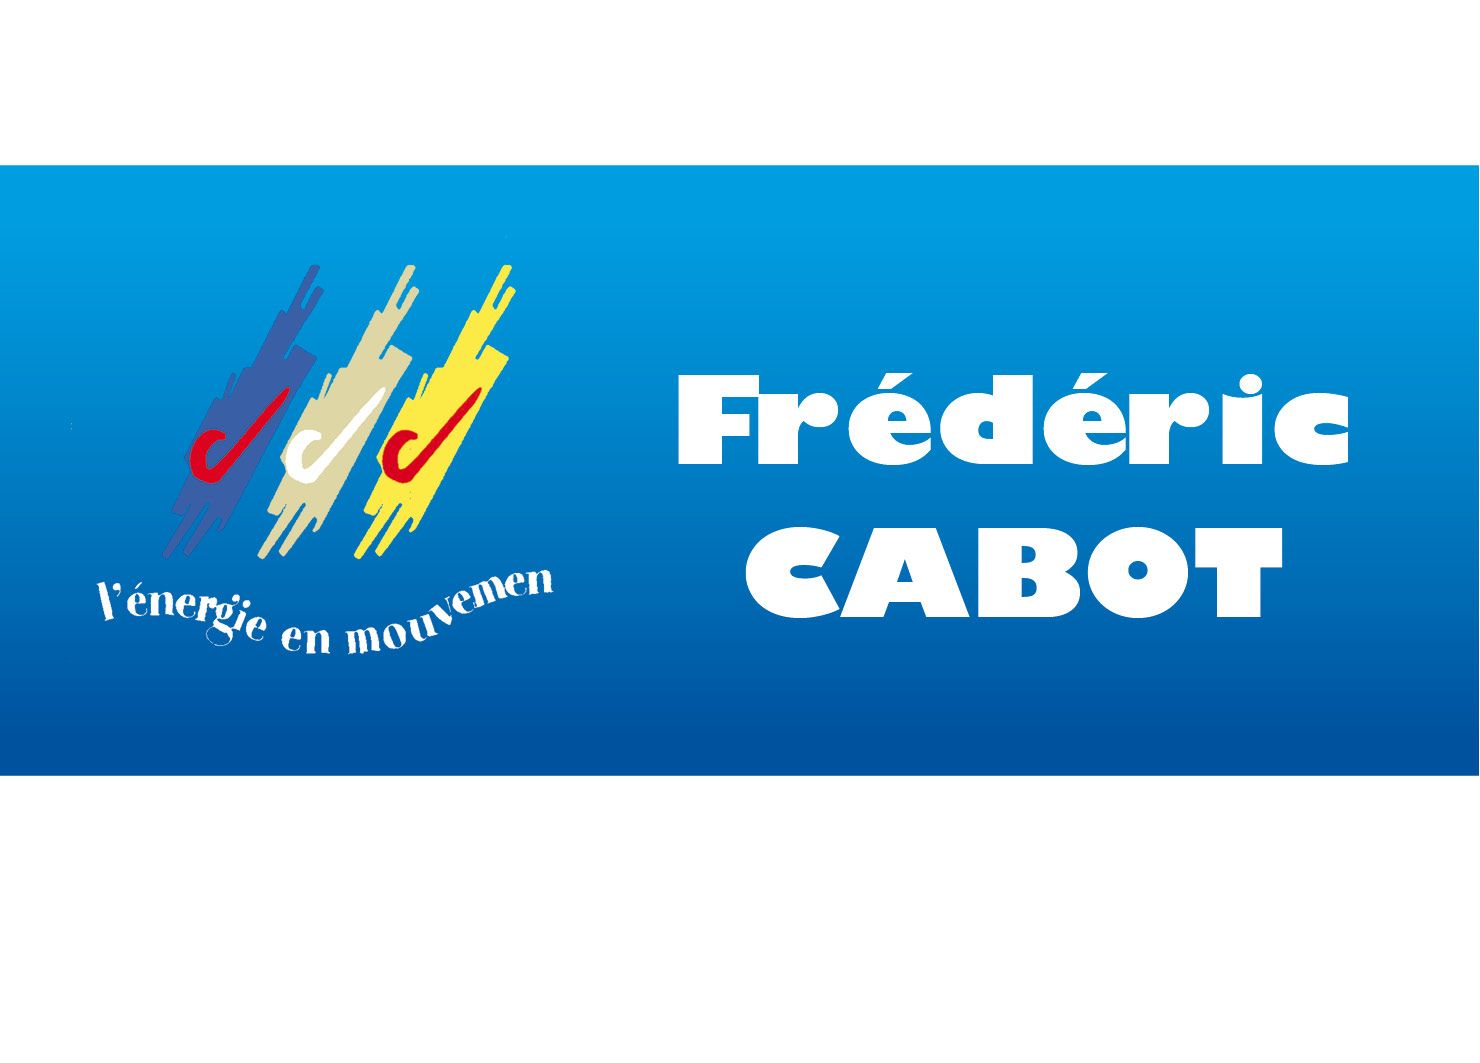 Fred cabot logo